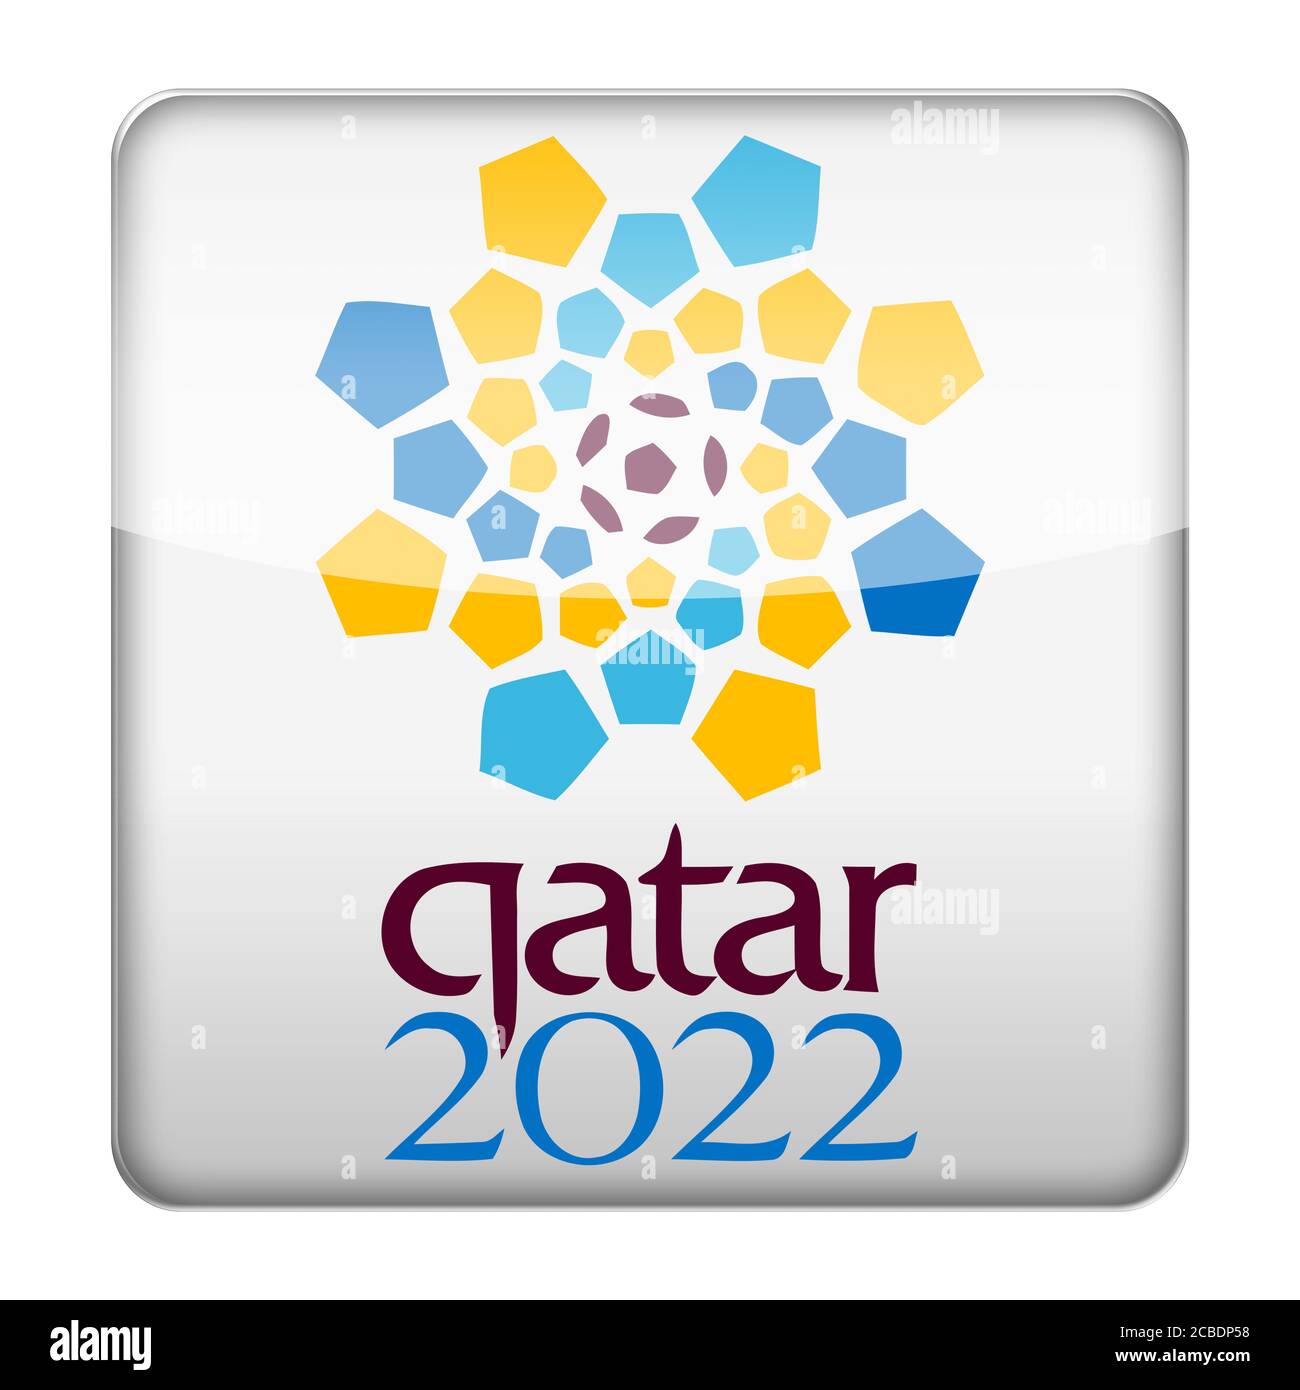 Qatar FIFA World Cup 2022 logo icon Stock Photo